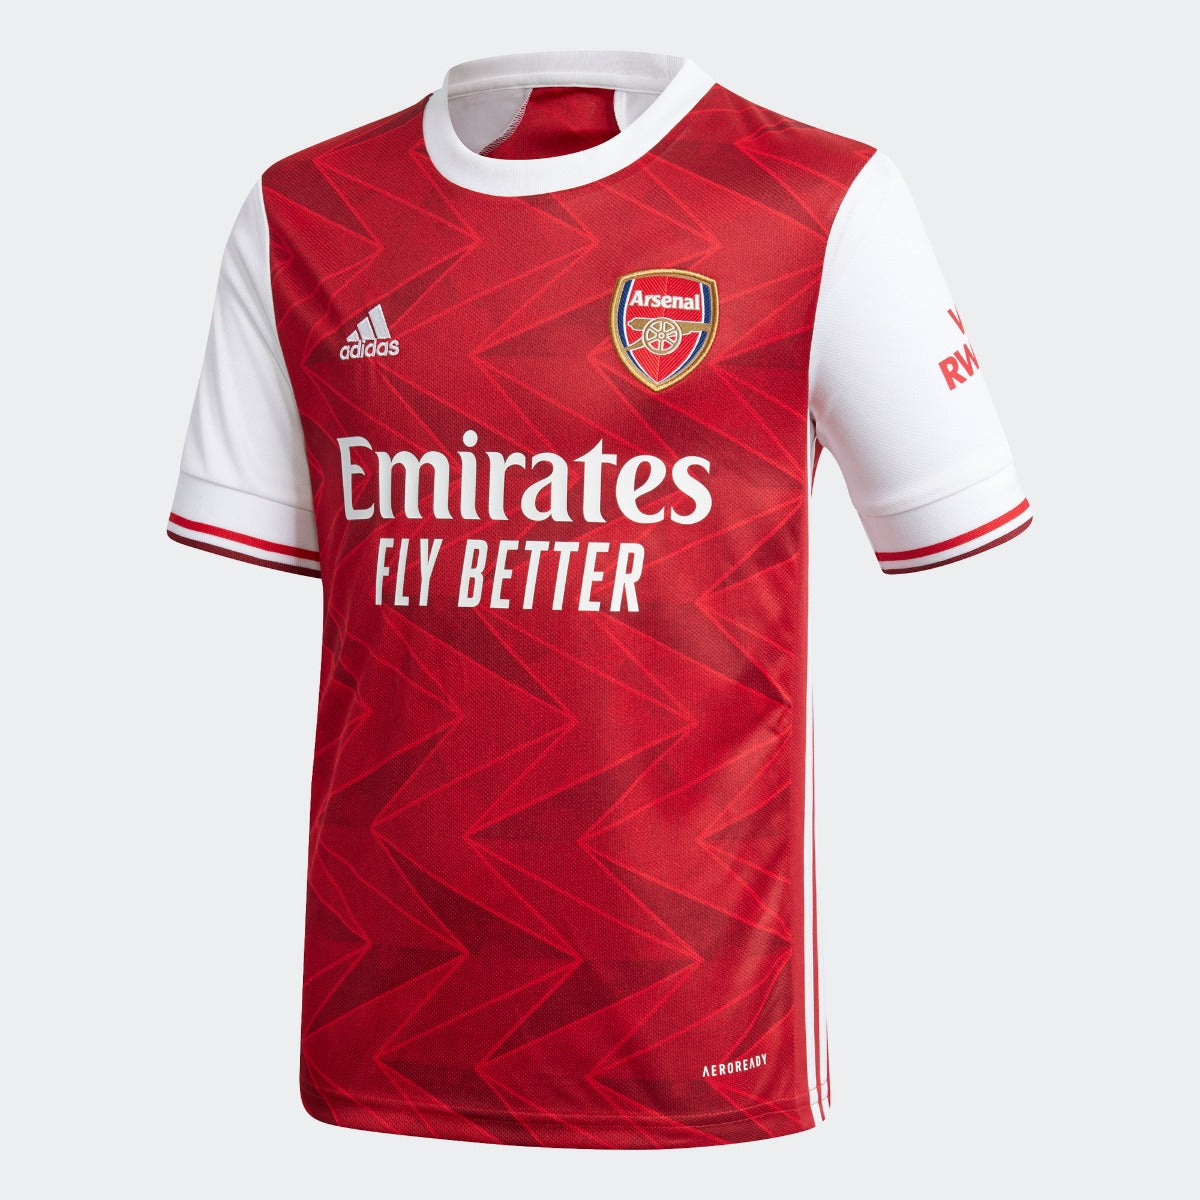 Adidas, Adidas 2020-21 Arsenal Maglia casalinga giovanile - Rosso-Bianco